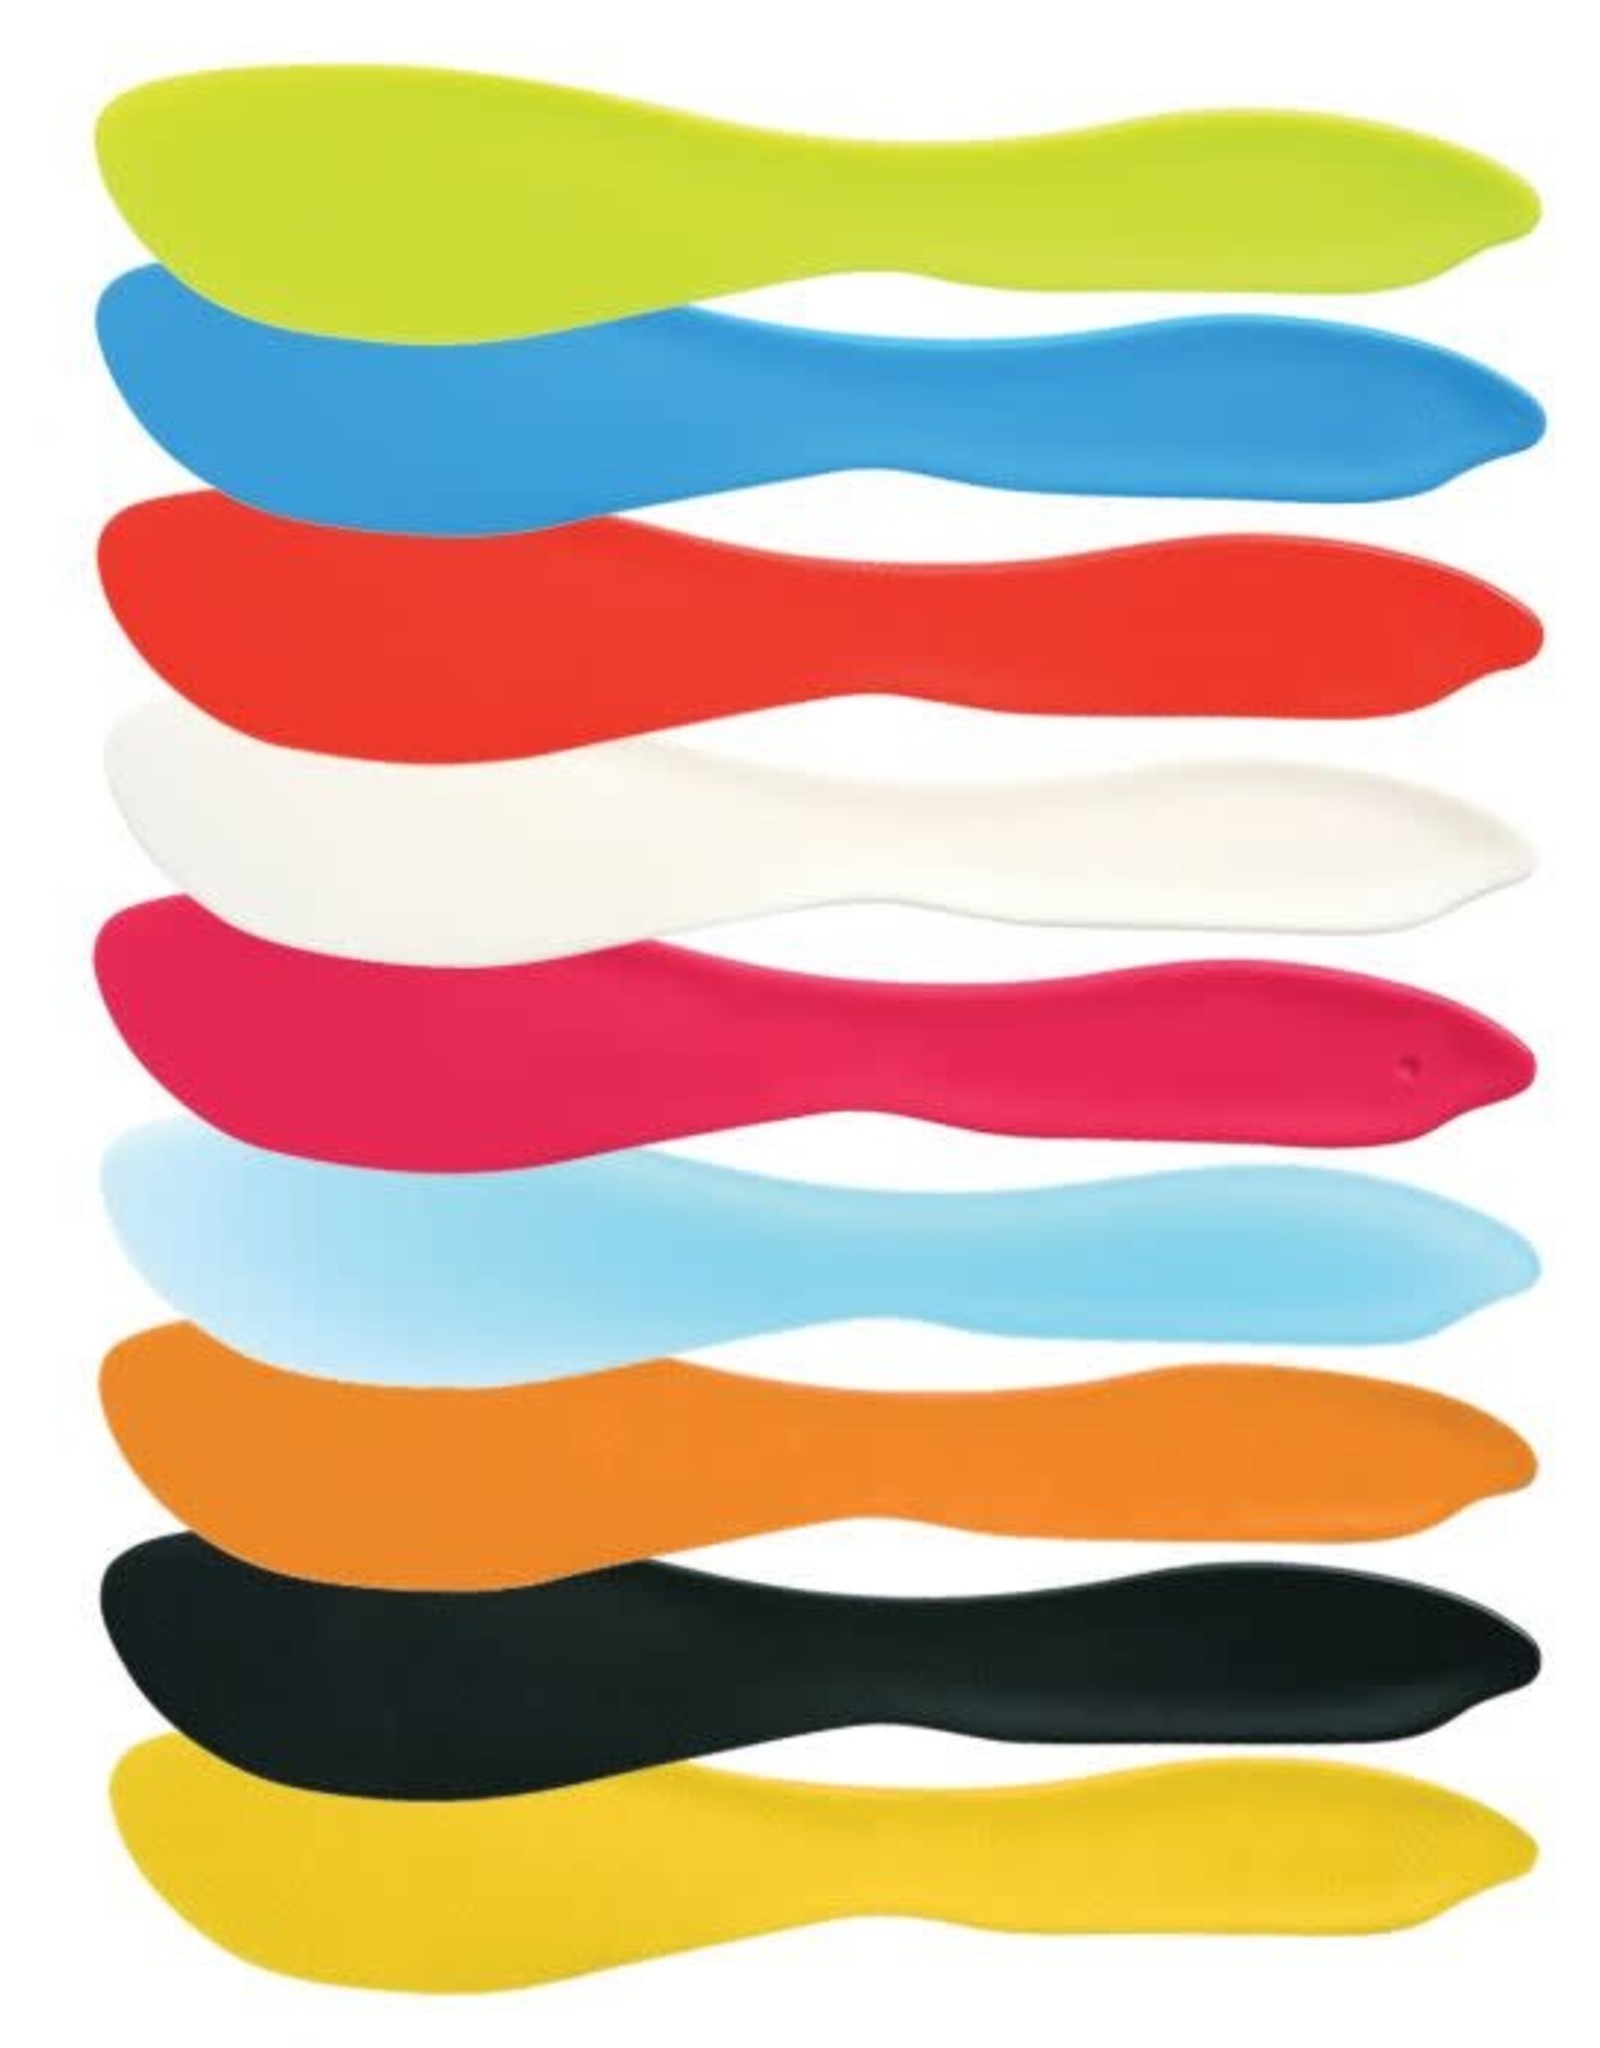 Linden Swedish Spreaders (assorted colors)